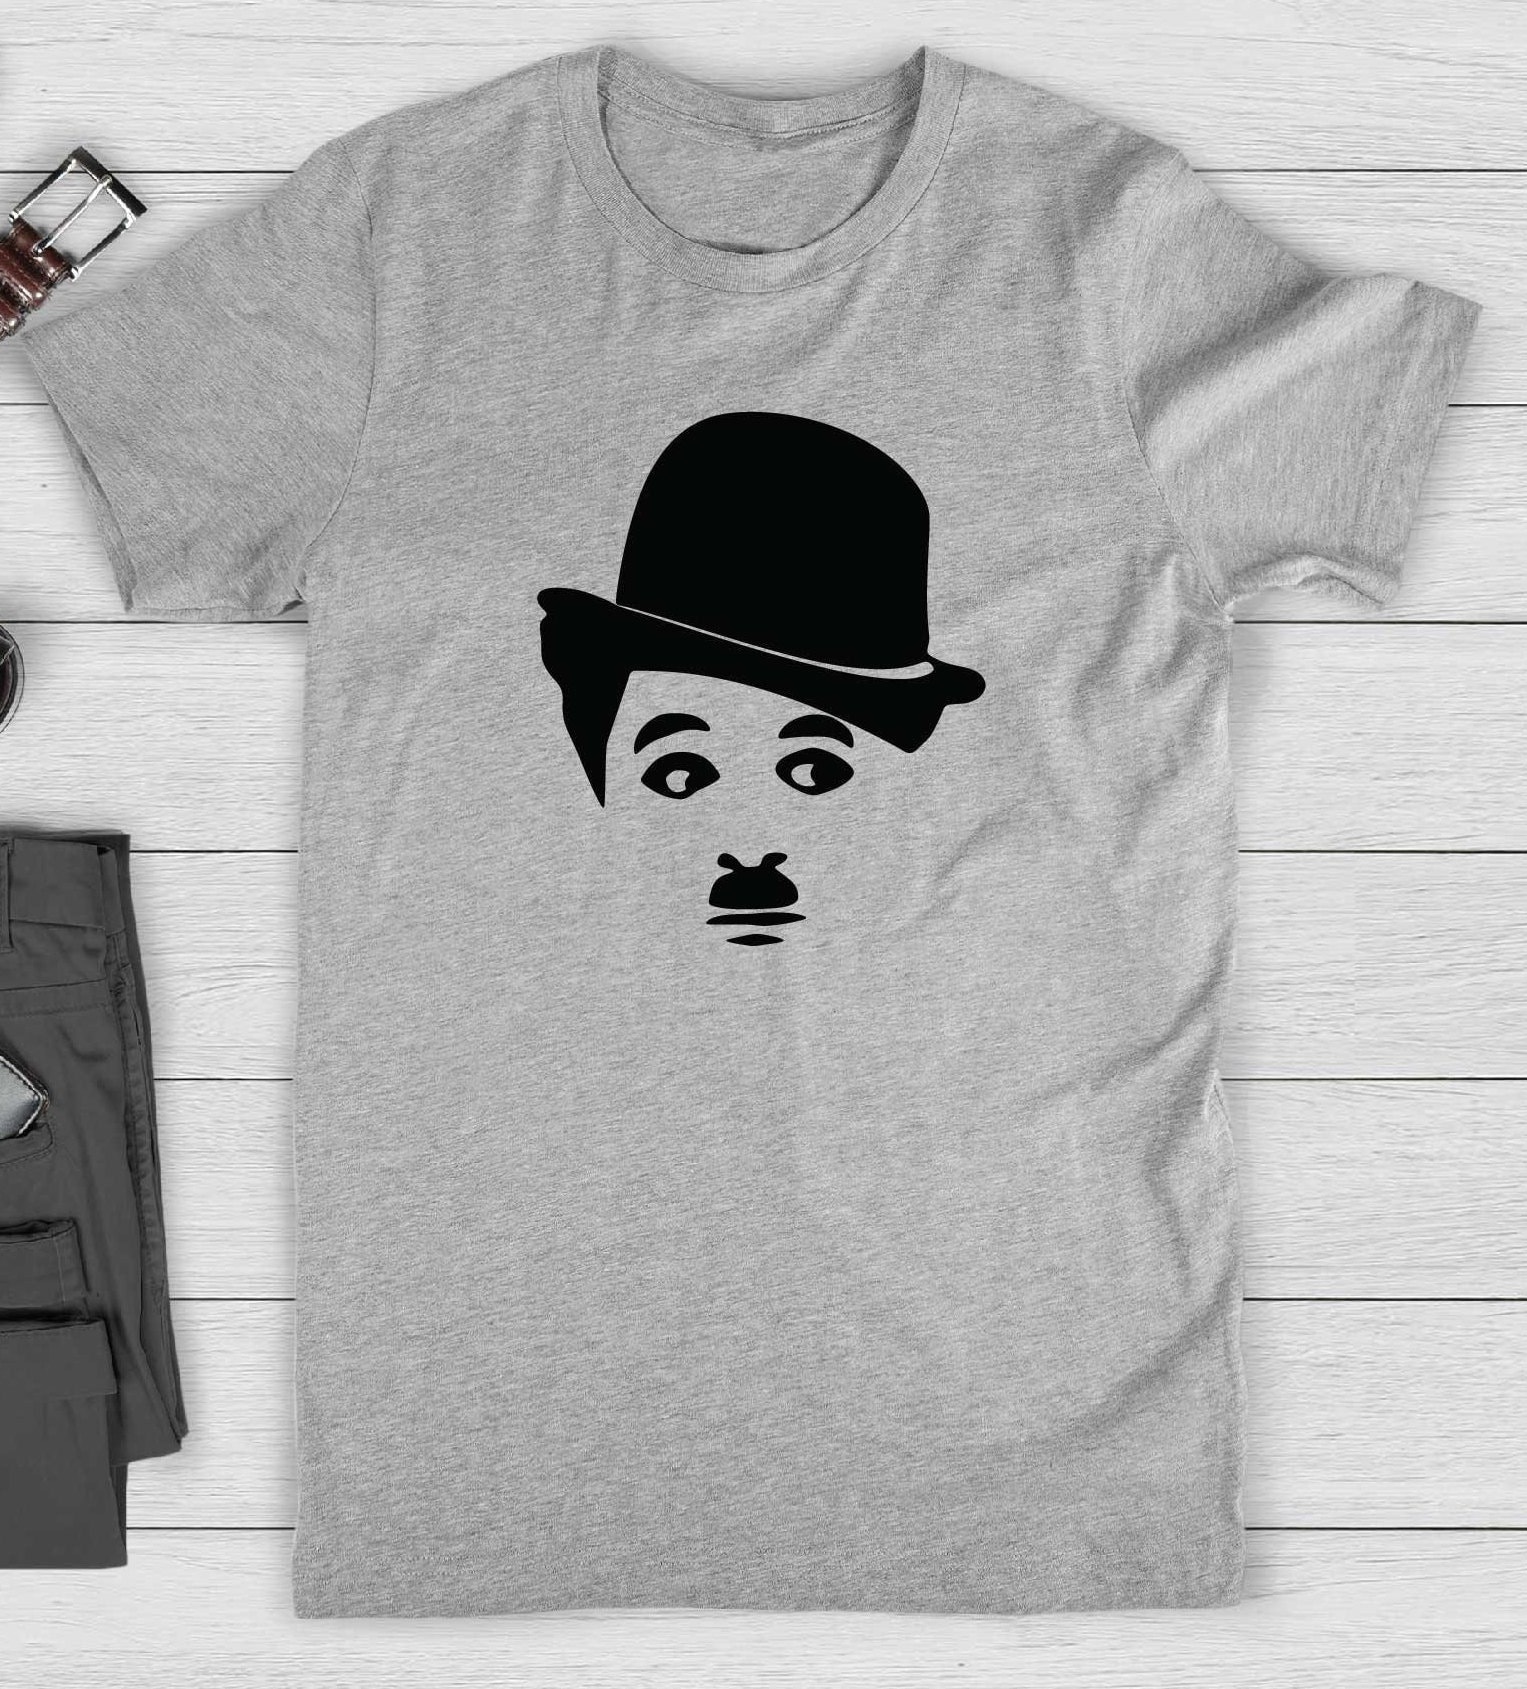 Discover Charlie Chaplin Shirt, Black Chaplin Shirt, Funny Charli Chaplin T-shirt